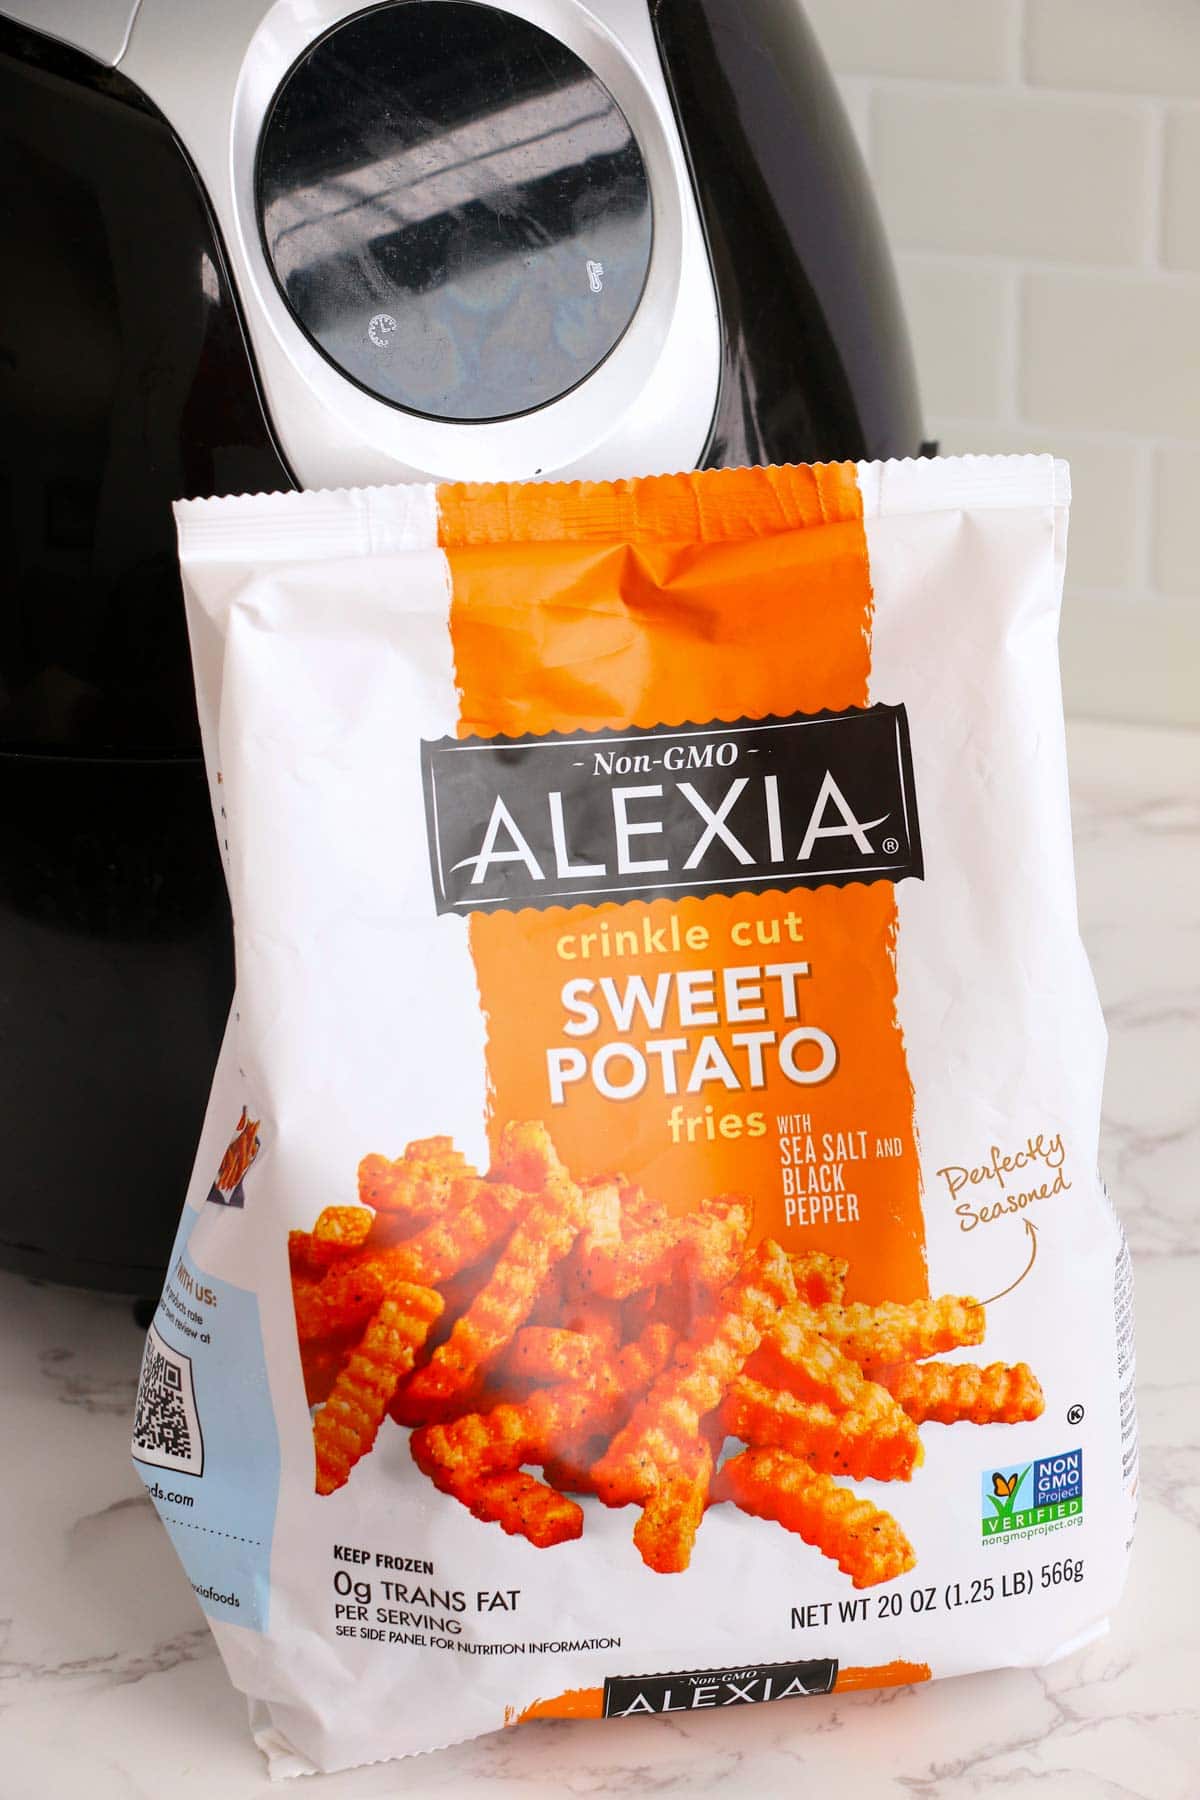 A bag of Alexia frozen sweet potato fries in front of an air fryer.